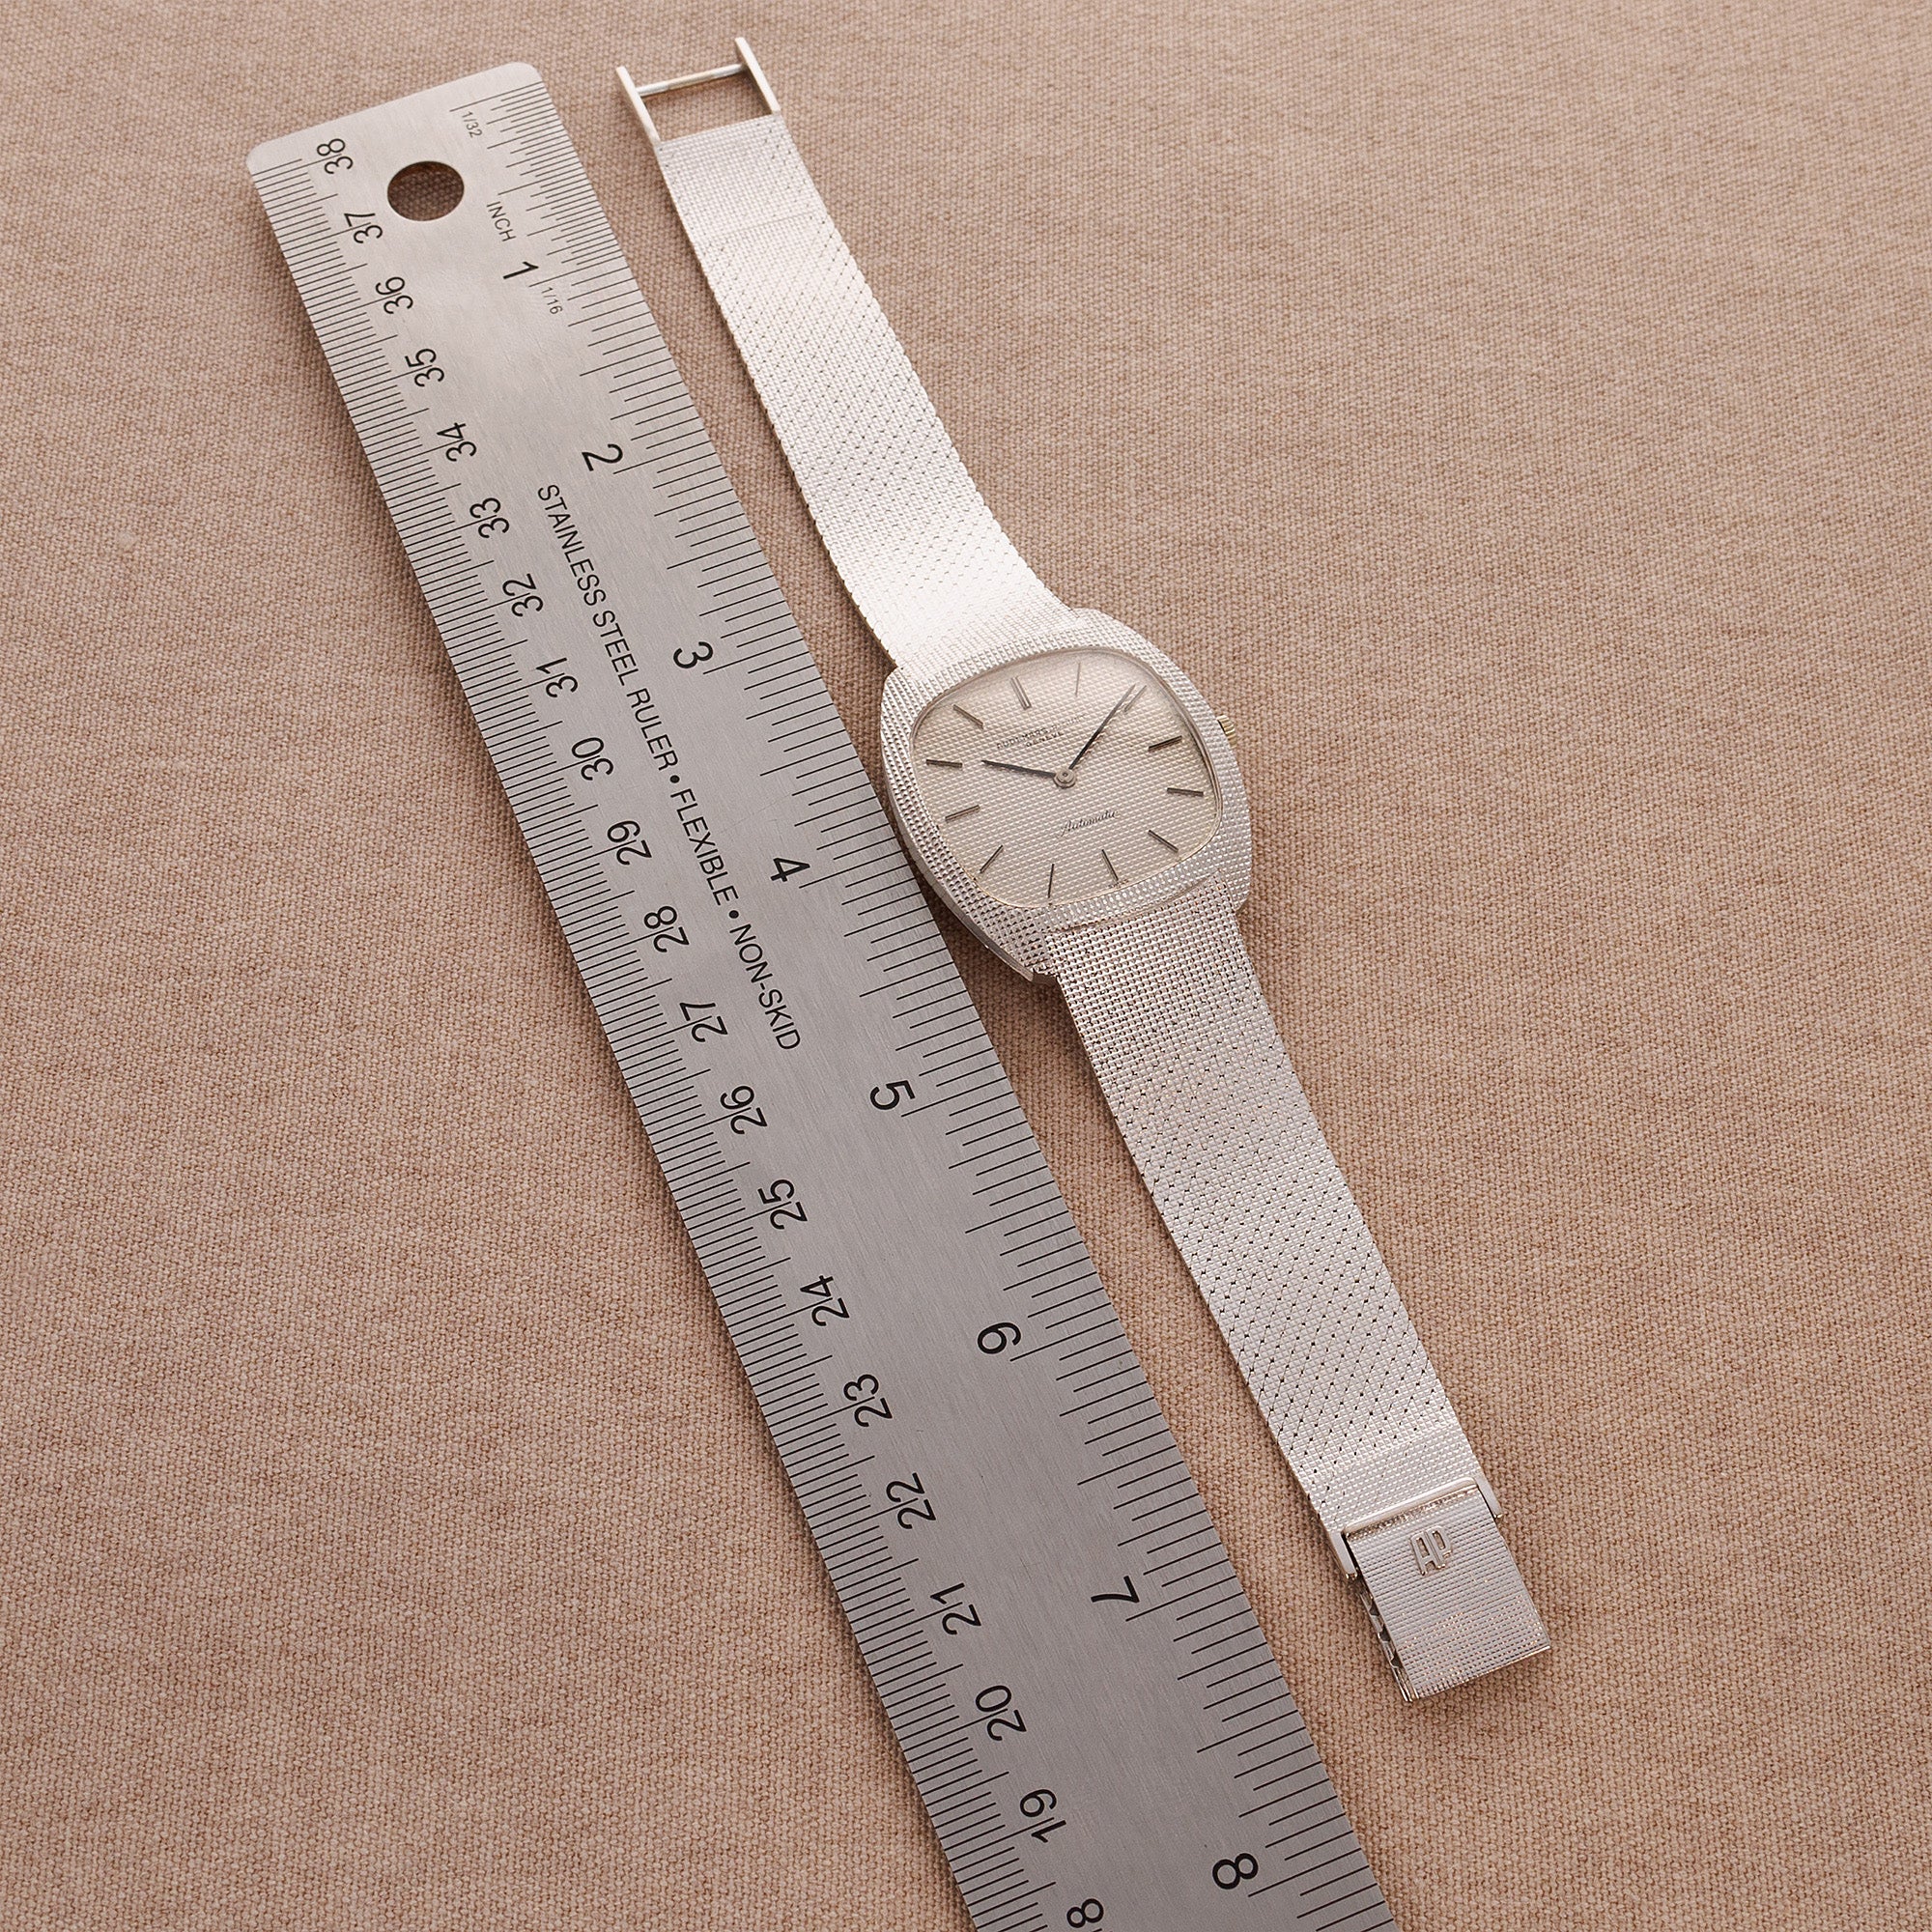 Audemars Piguet - Audemars Piguet White Gold Automatic Watch Ref. 5279 - The Keystone Watches